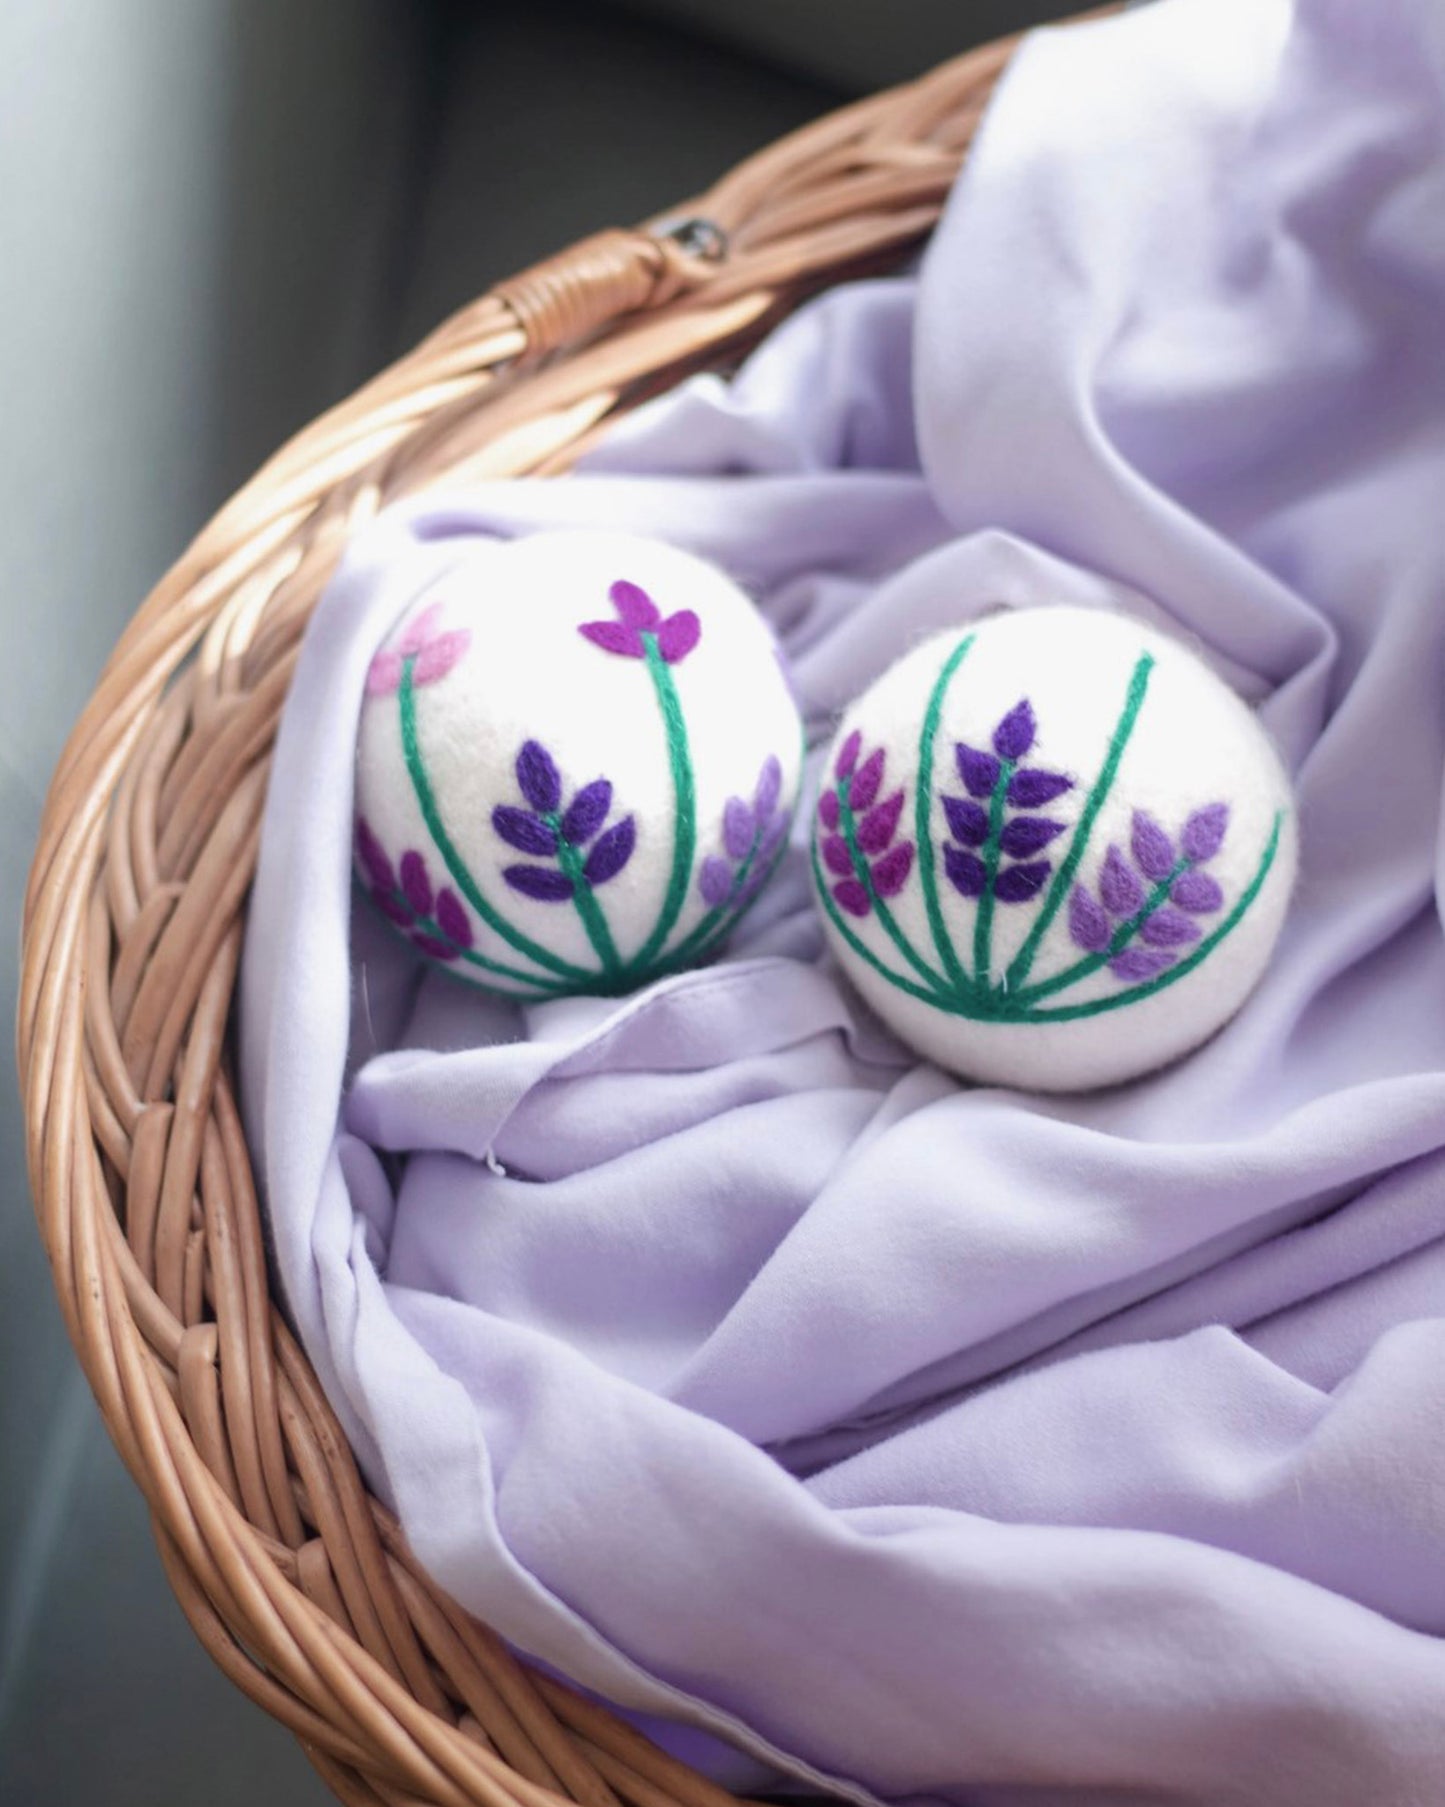 Lavender Fields Eco-Dryer Balls w/ Bee, Set of 3